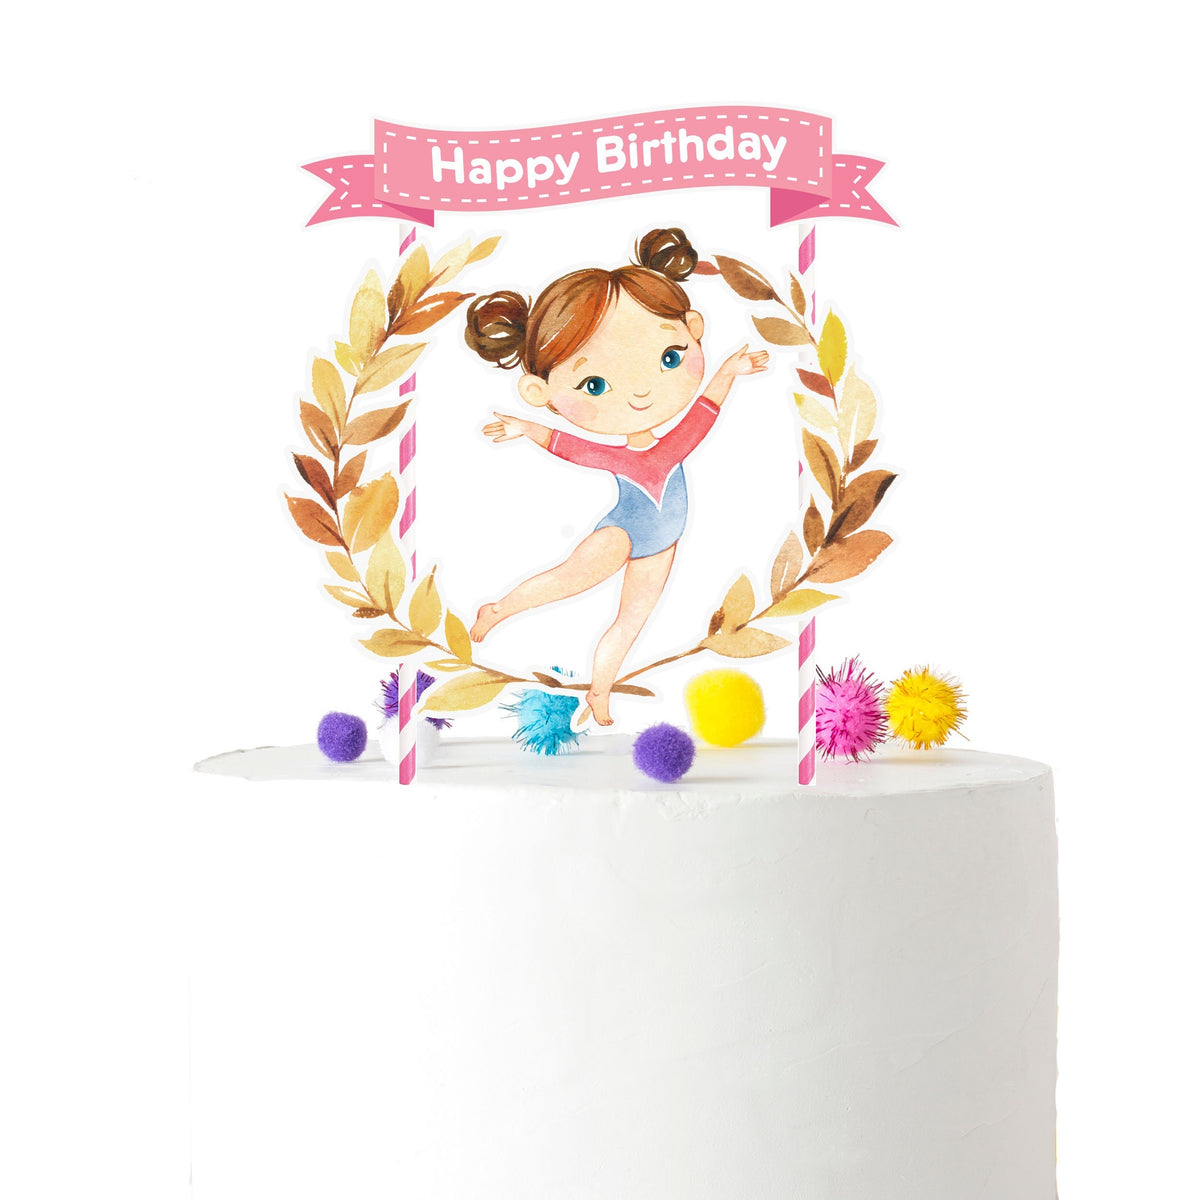 Tumble & Twirl - Energetic Gymnastic Girl Cake Topper for Birthday Celebrations